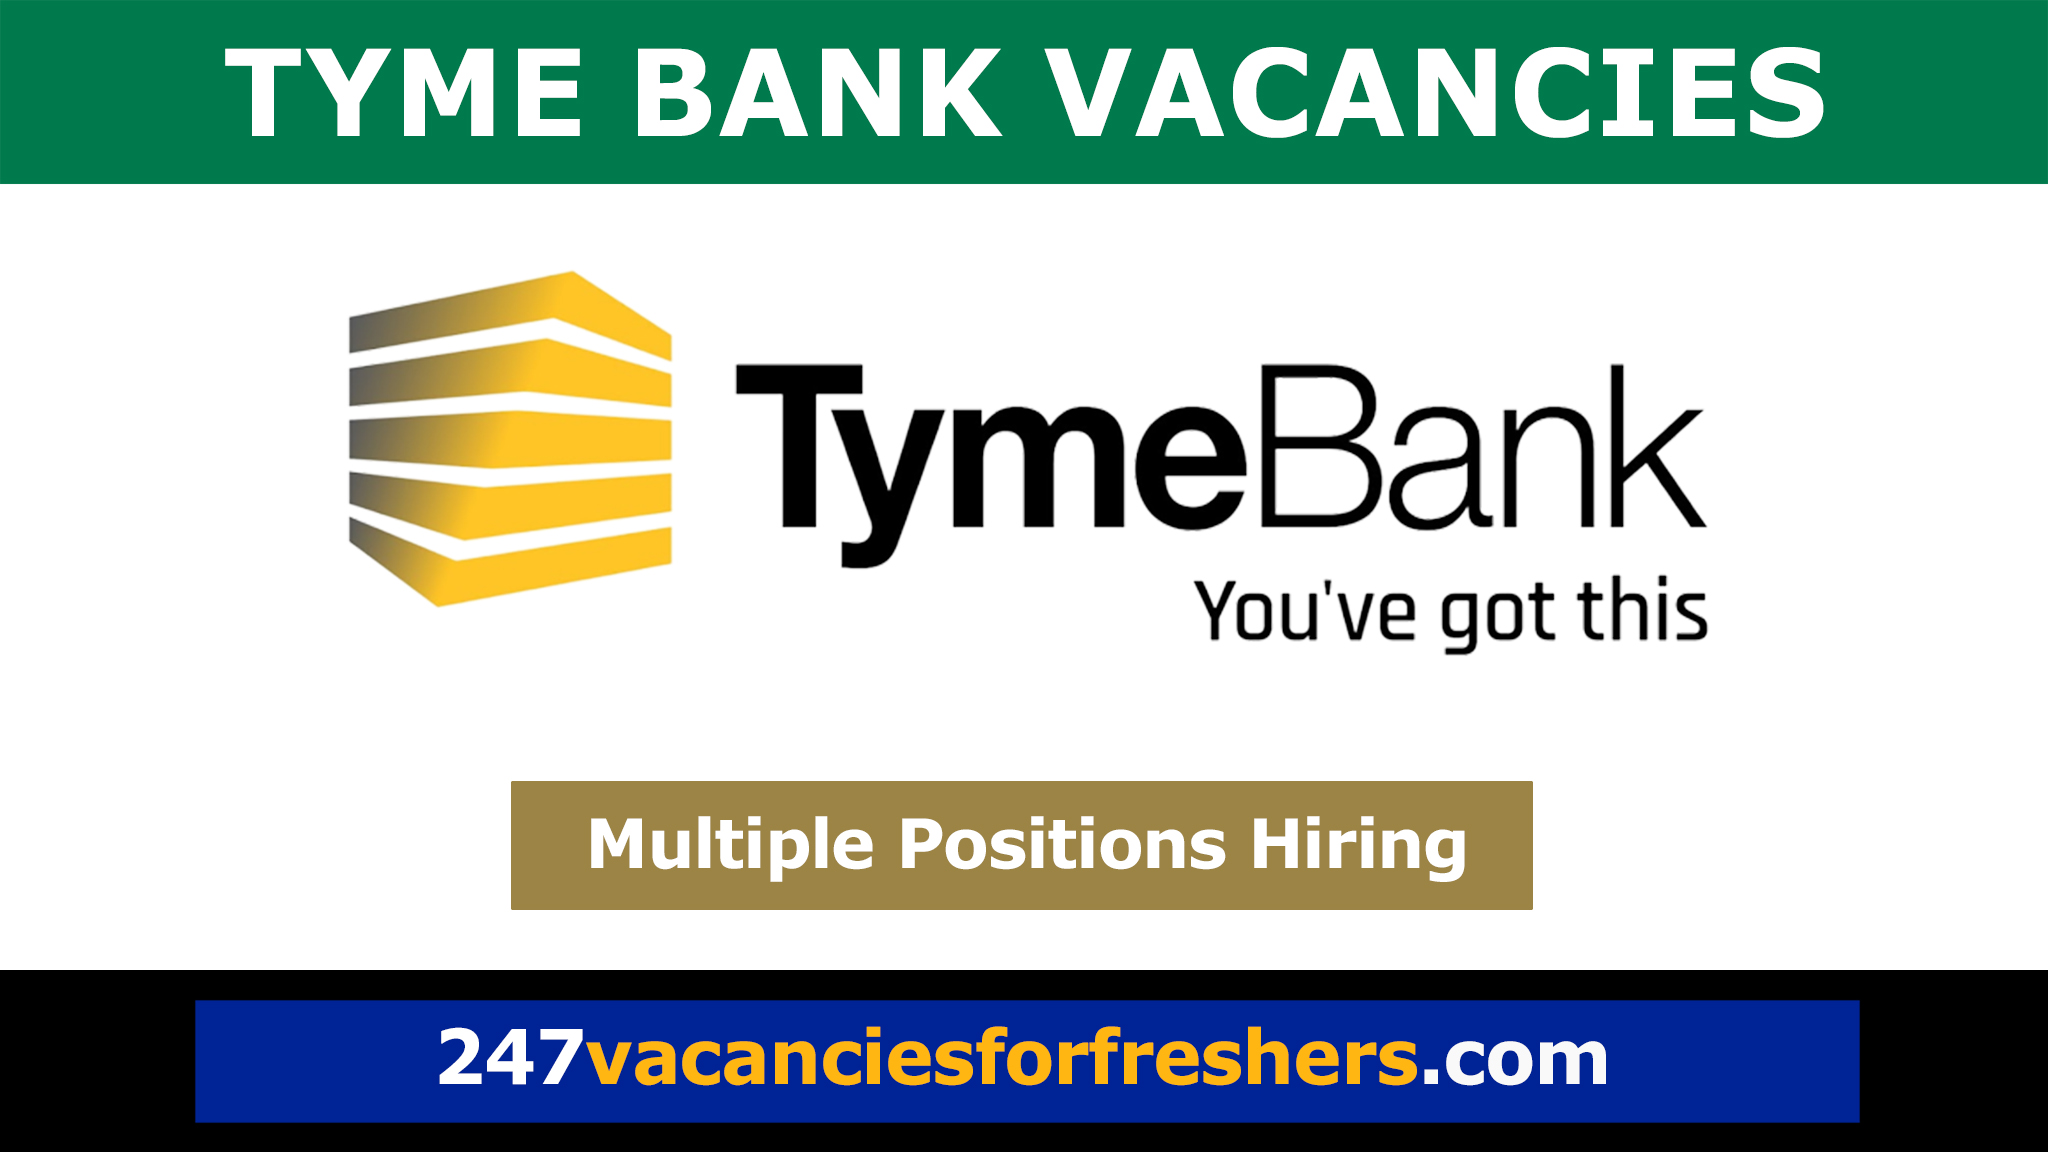 Tyme Bank Vacancies